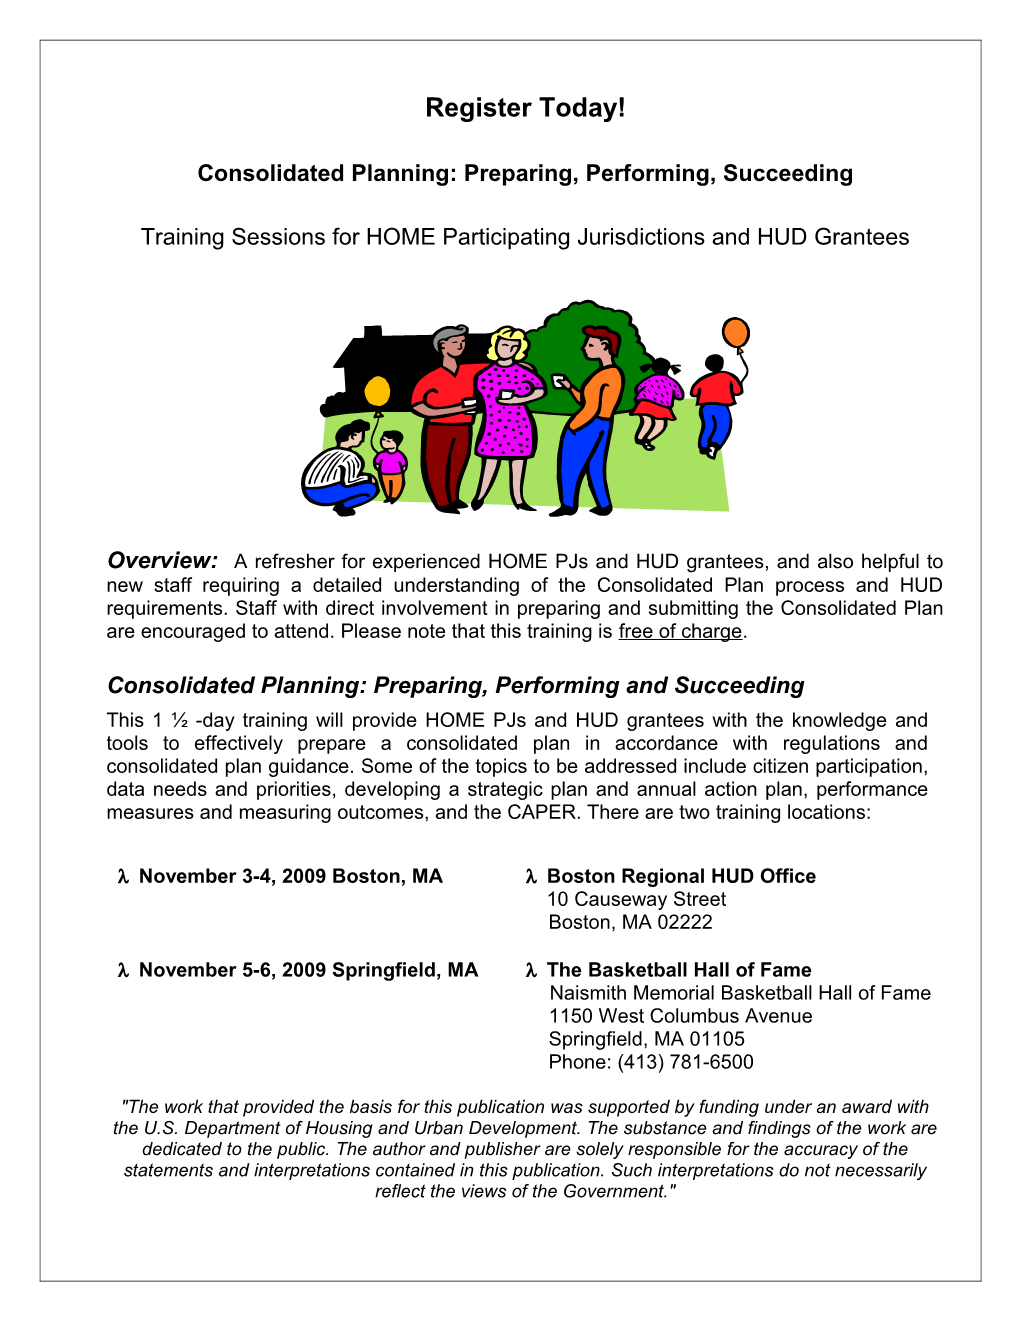 Consolidated Planning: Preparing, Performing, Succeeding